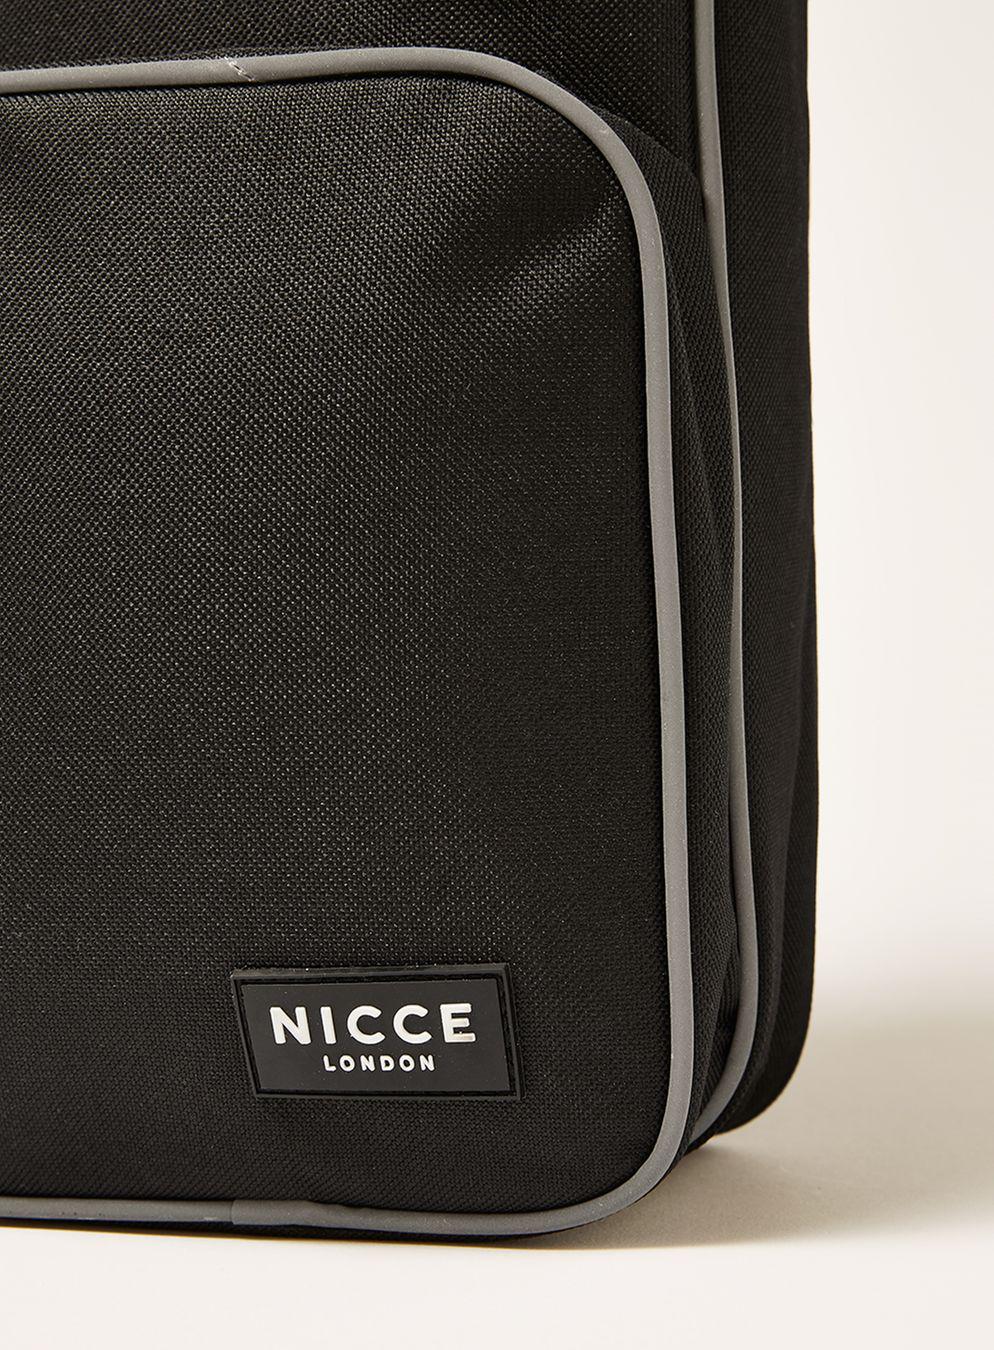 Nicce London Synthetic Black Cross Body Bag for Men - Lyst